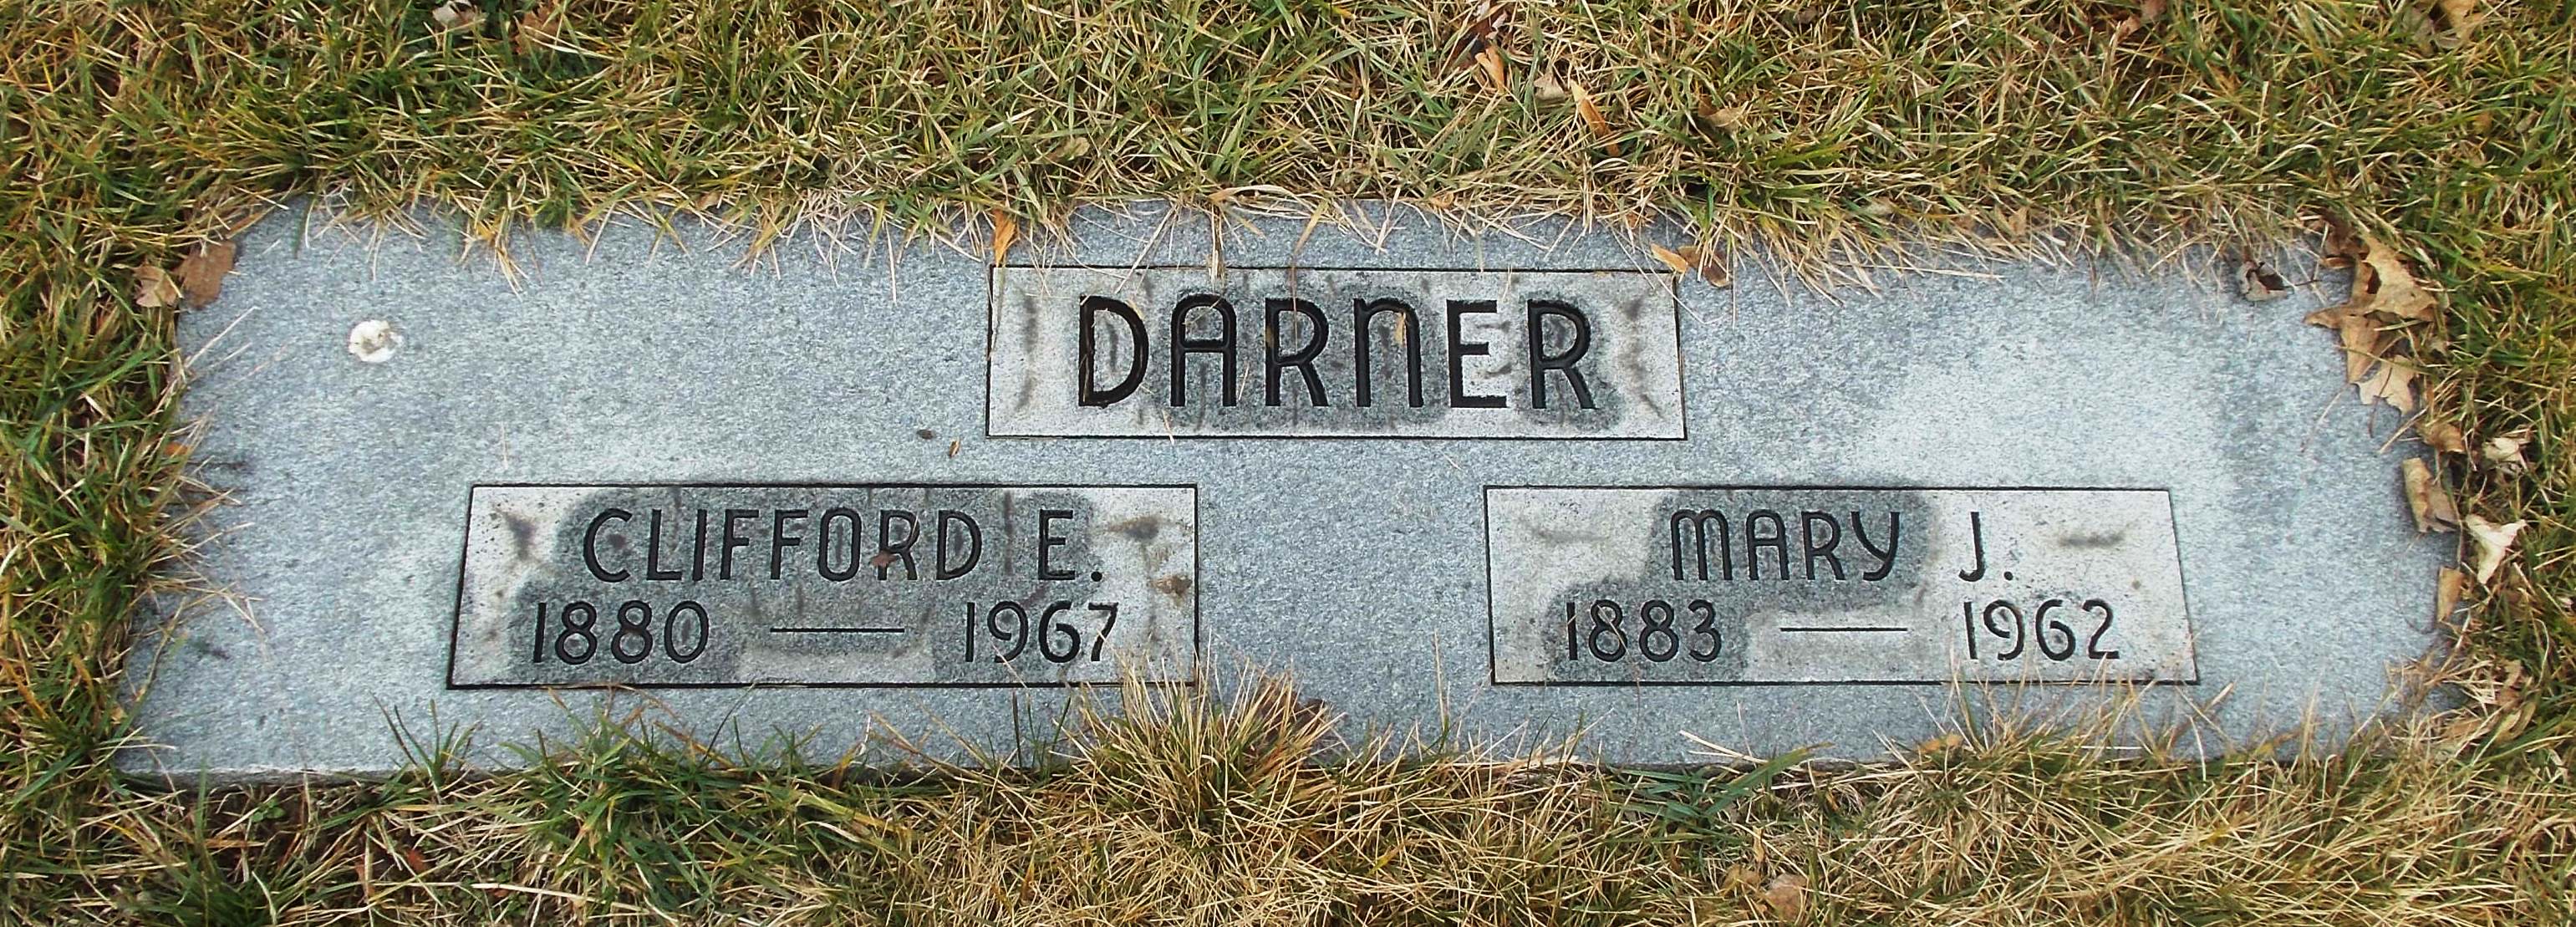 Mary J Darner